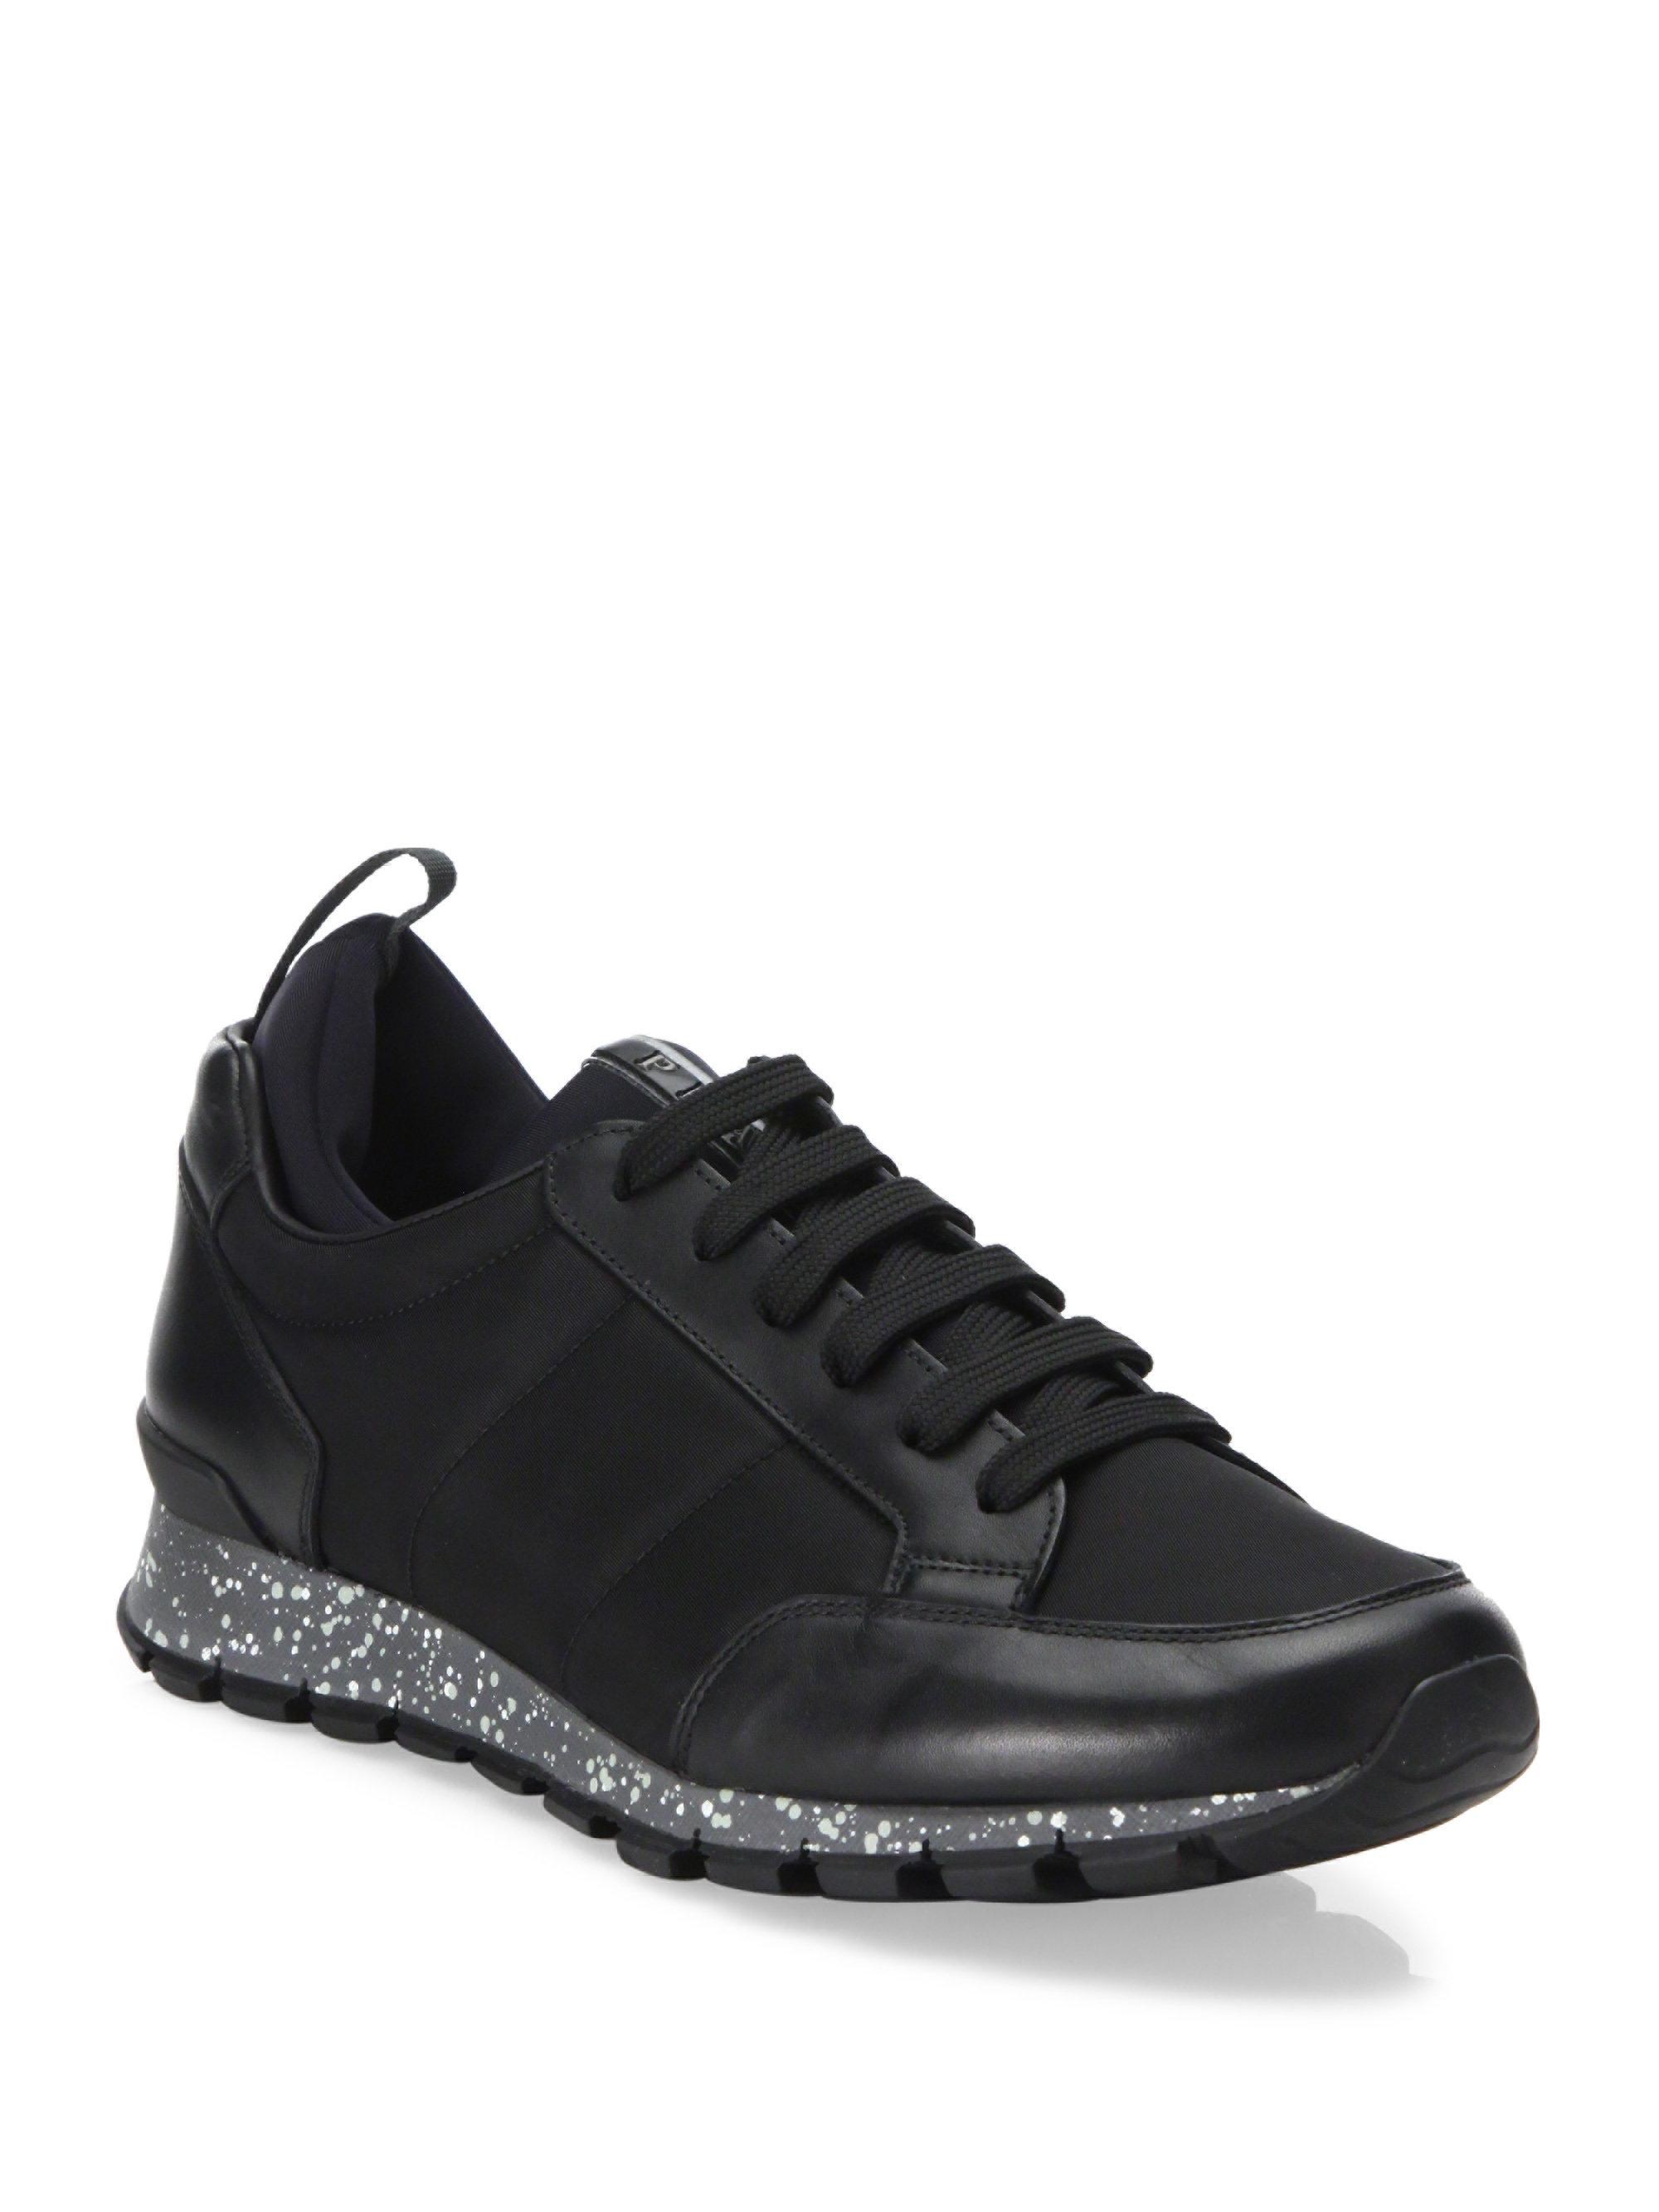 Prada Linea Rossa Street Sneakers in Black for Men - Lyst